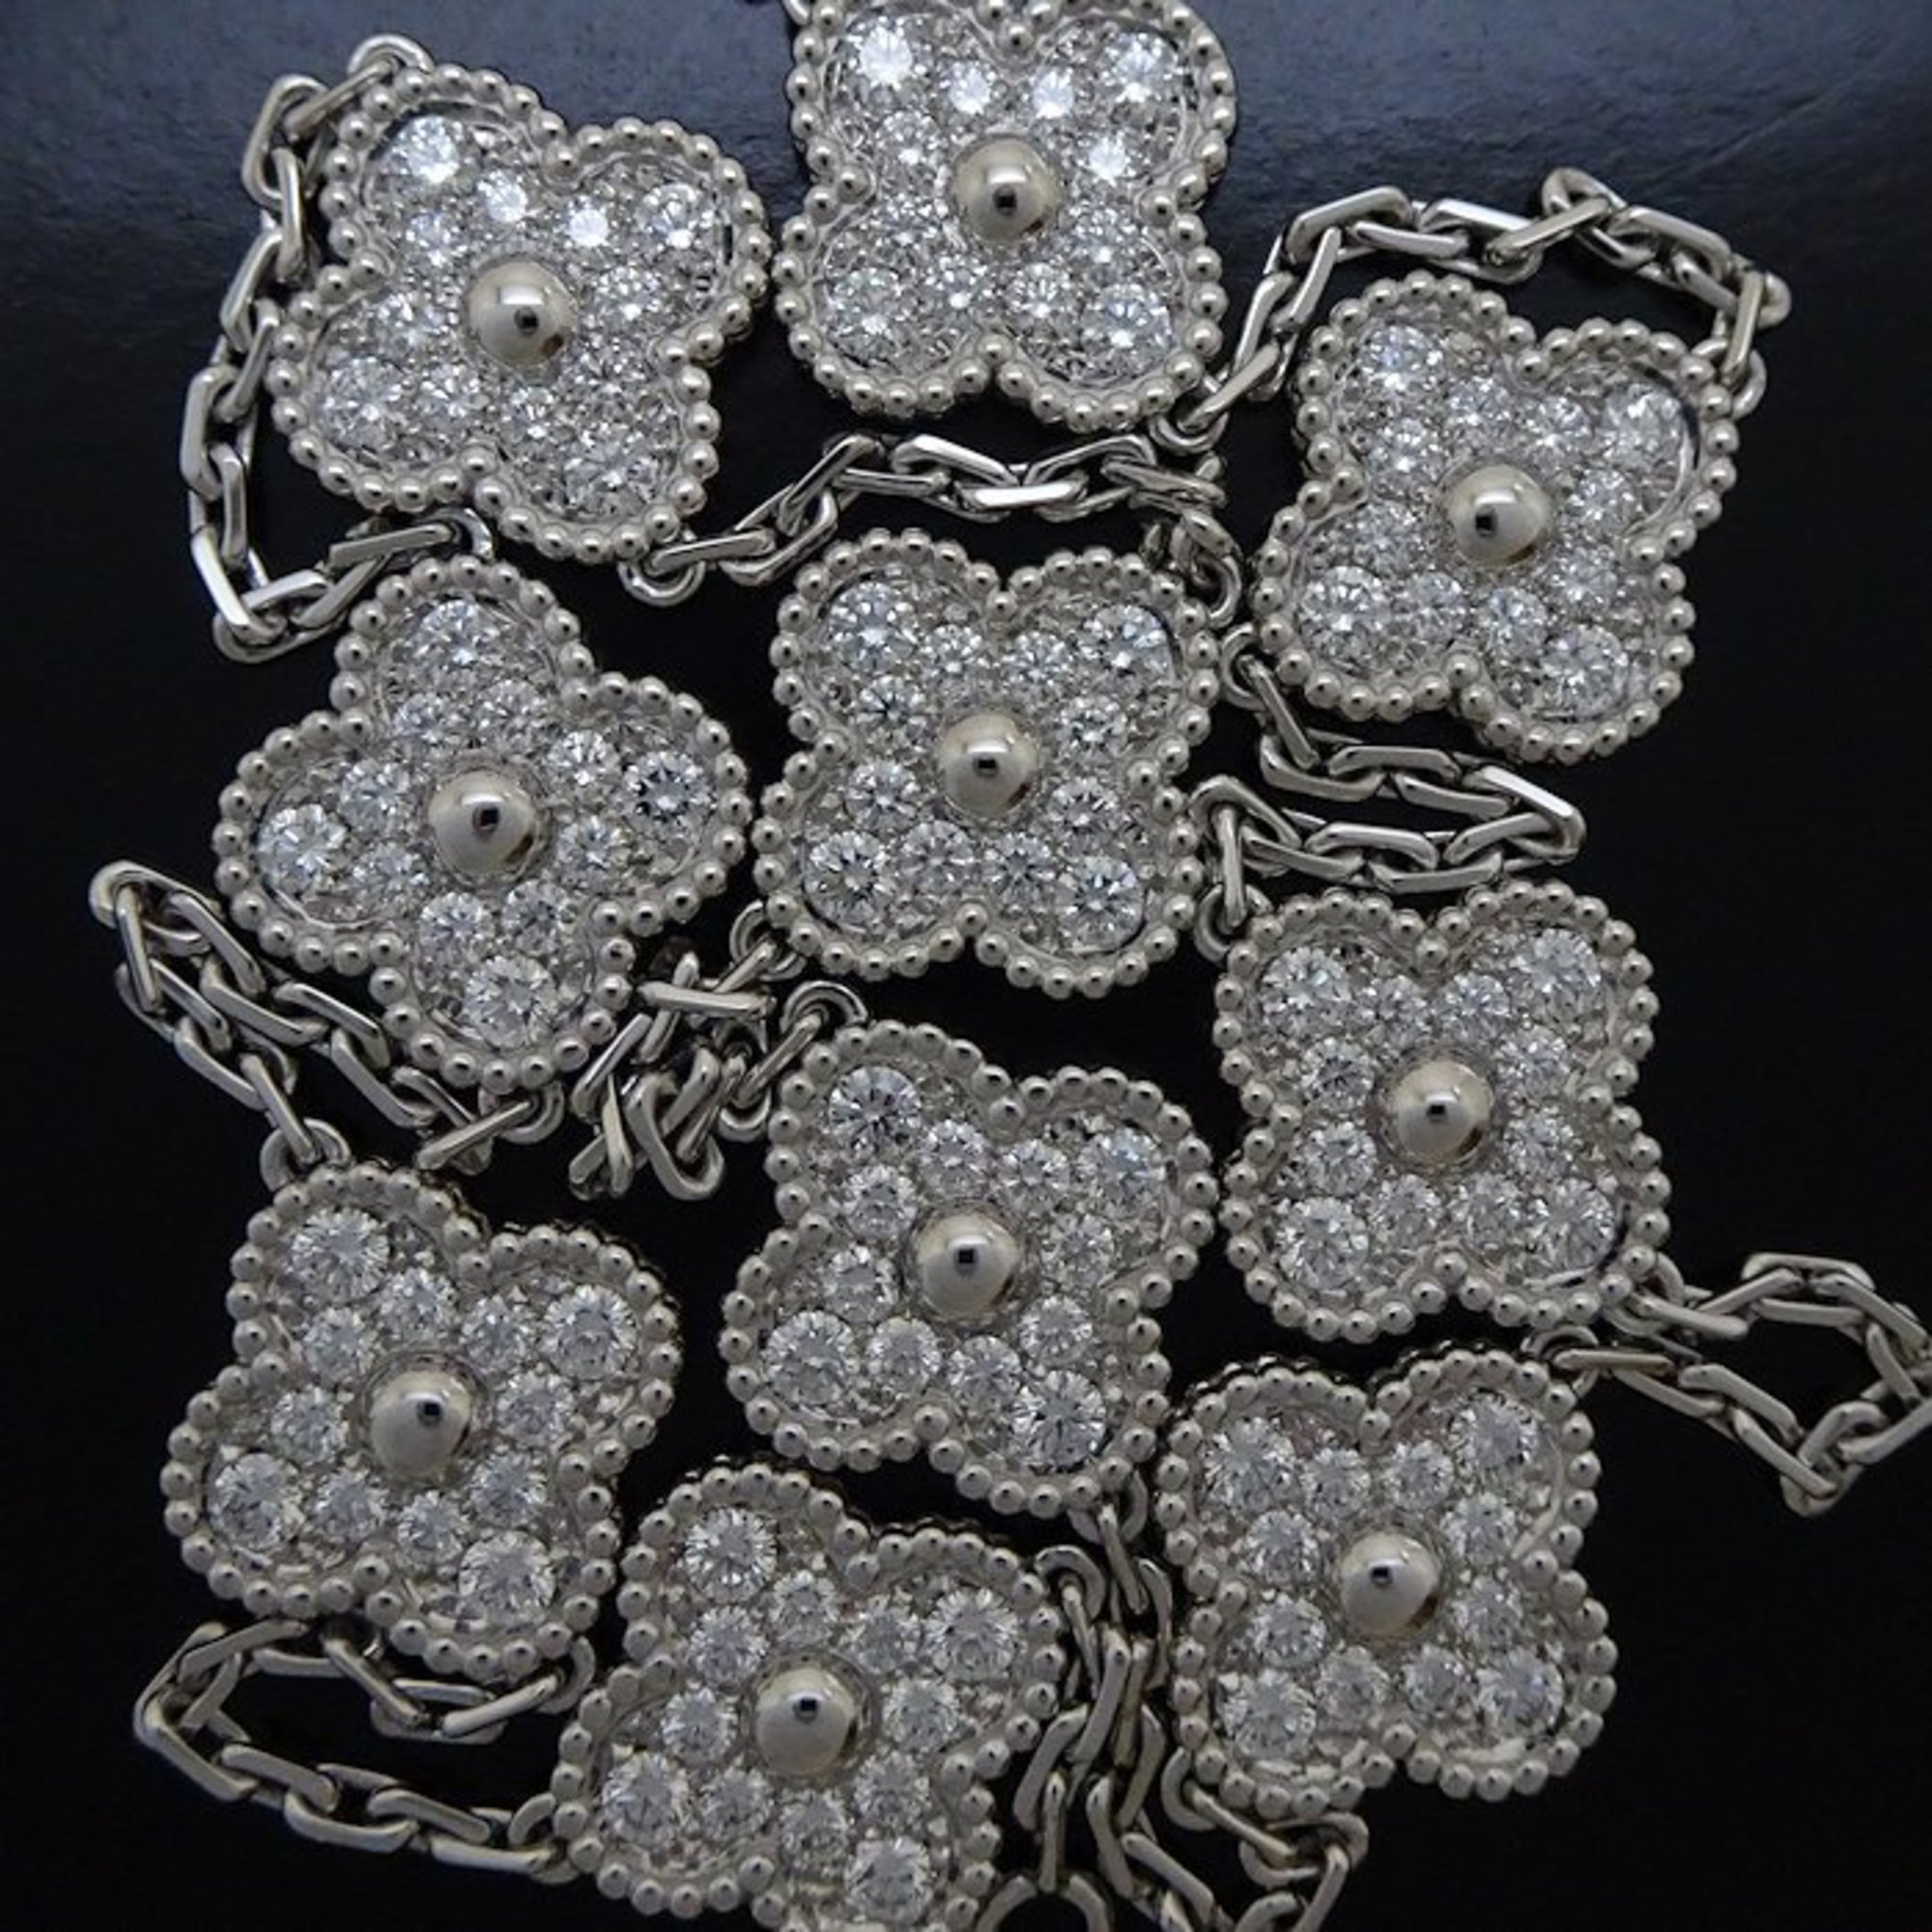 Van Cleef & Arpels Vintage Alhambra Necklace 10 Motifs Diamond VCARA42400 K18WG White Gold 290285